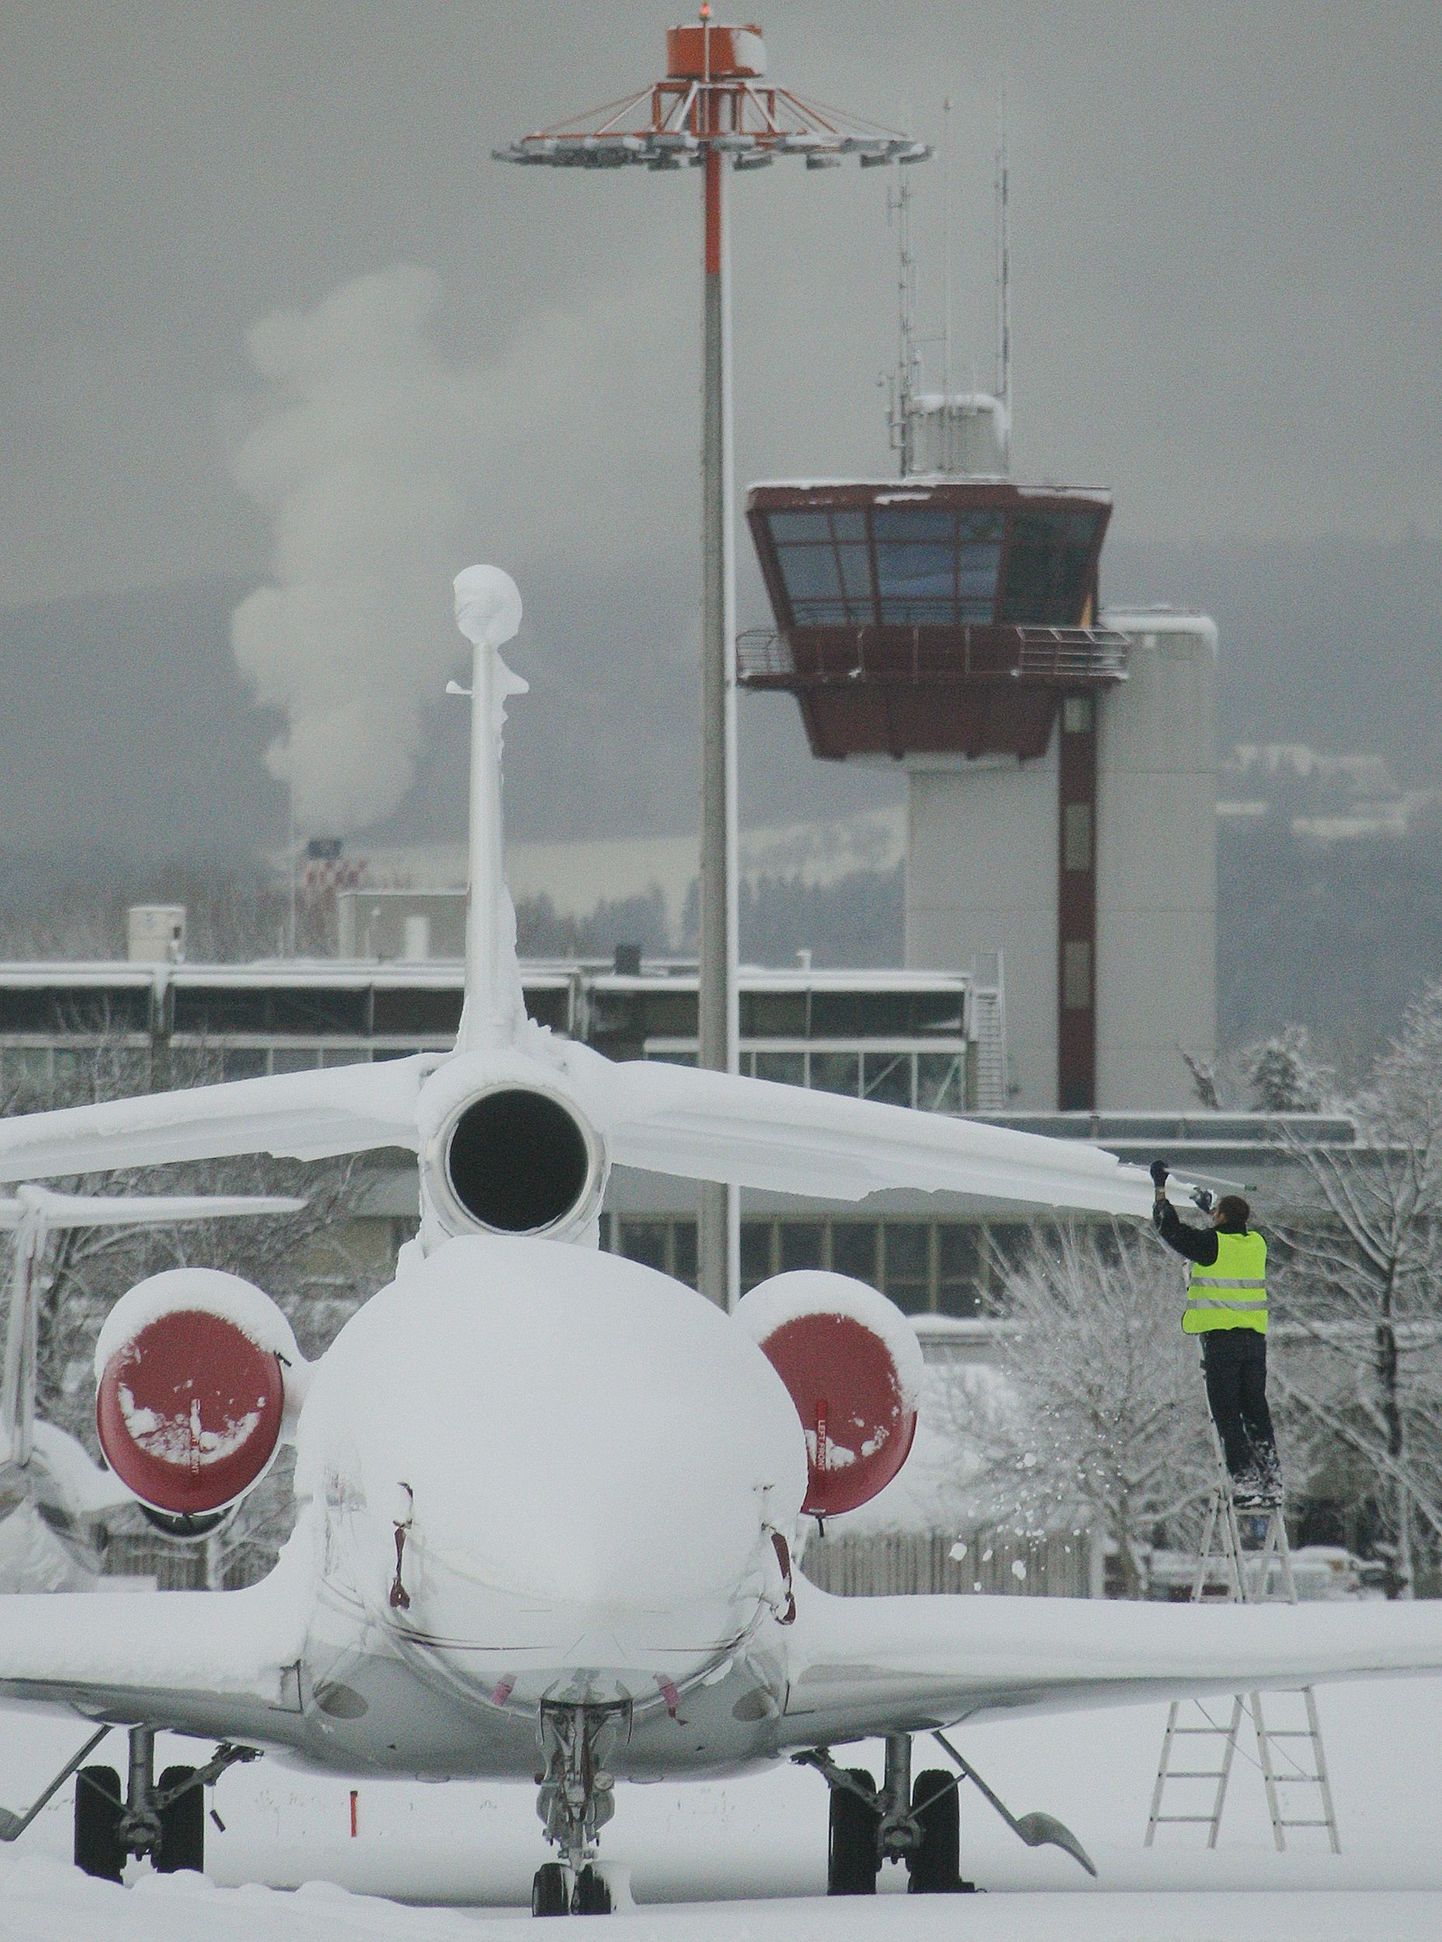 Lume alla mattunud lennuk Zürichi lennuväljal.